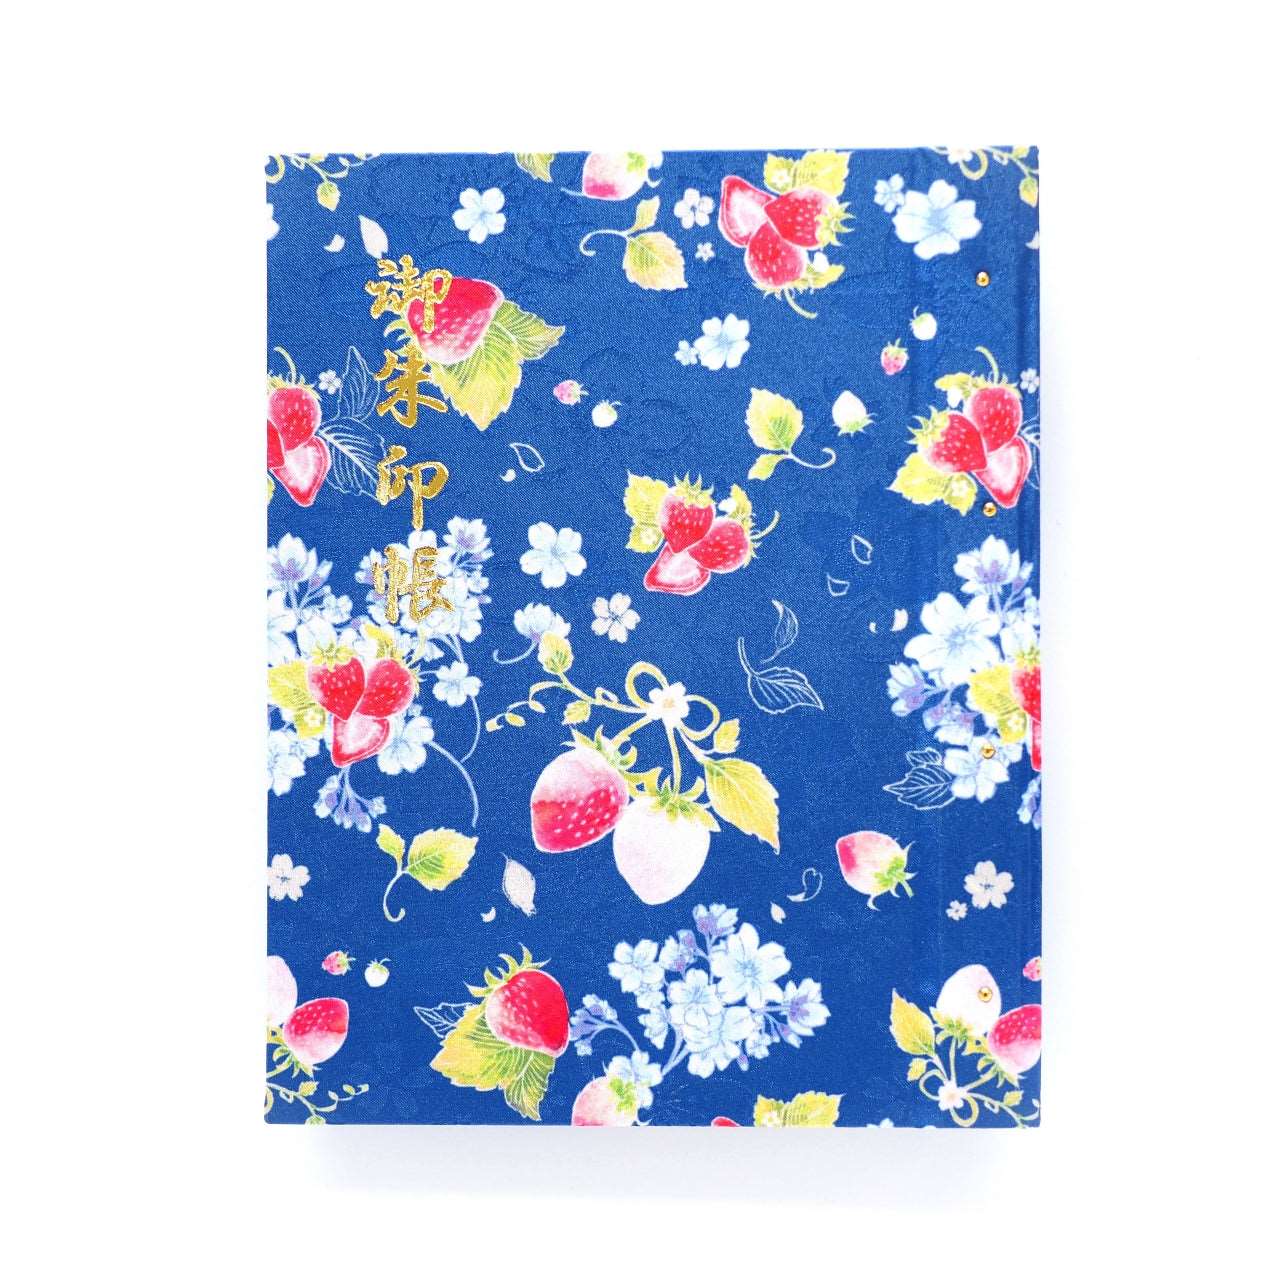 Goshuin holder (standard size) "Strawberry Sakura" blue